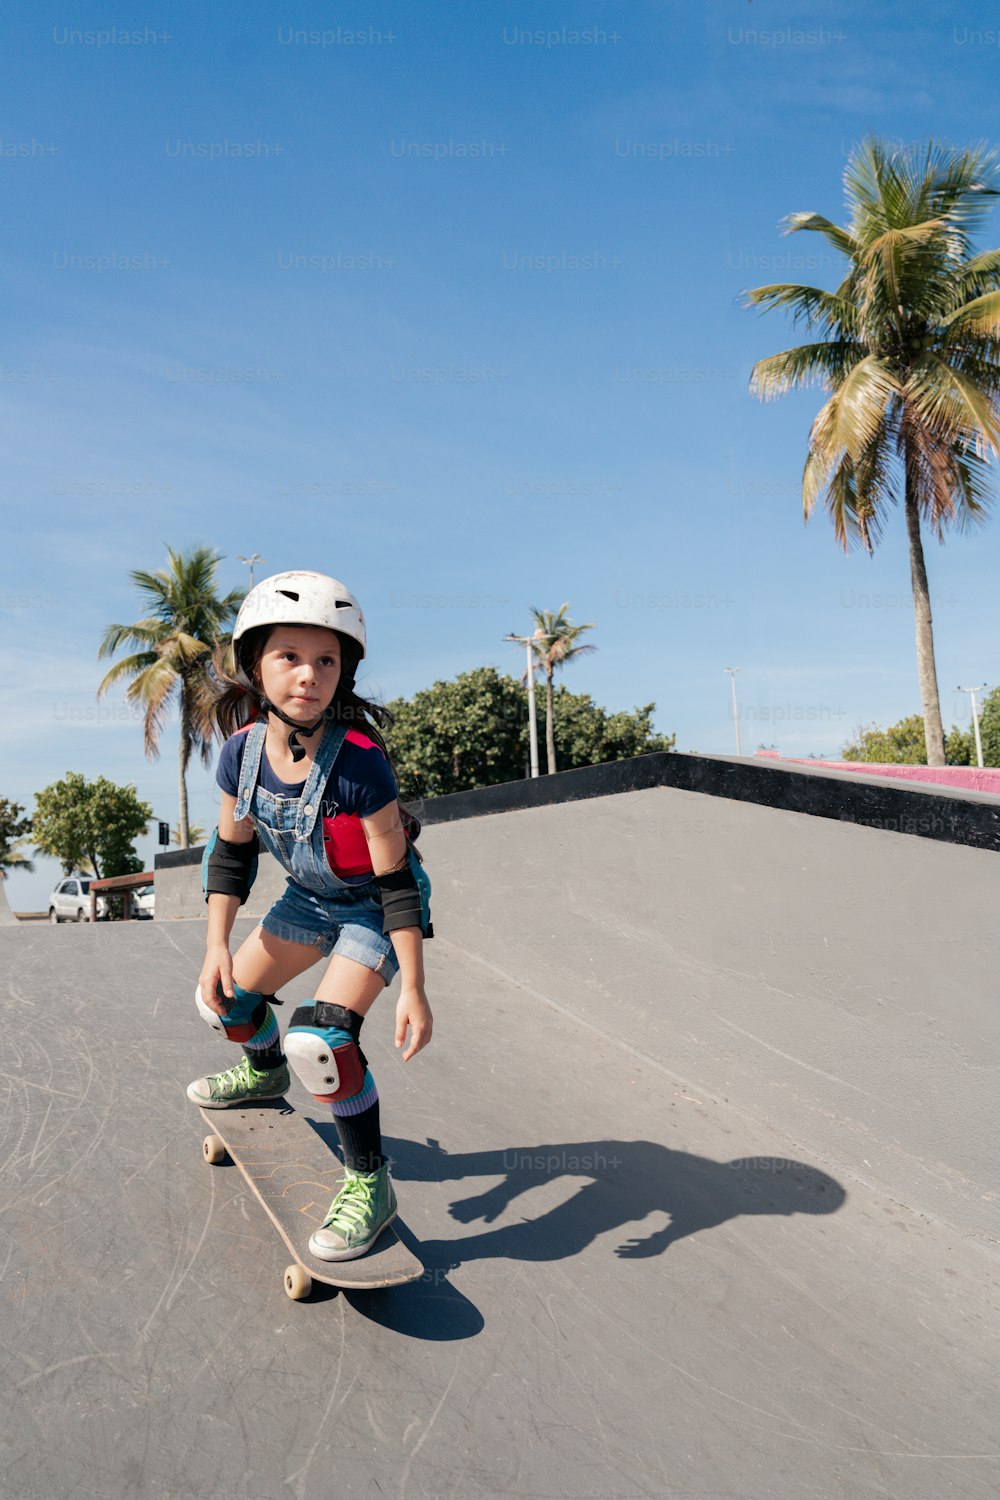 a young boy riding a skateboard down a ramp